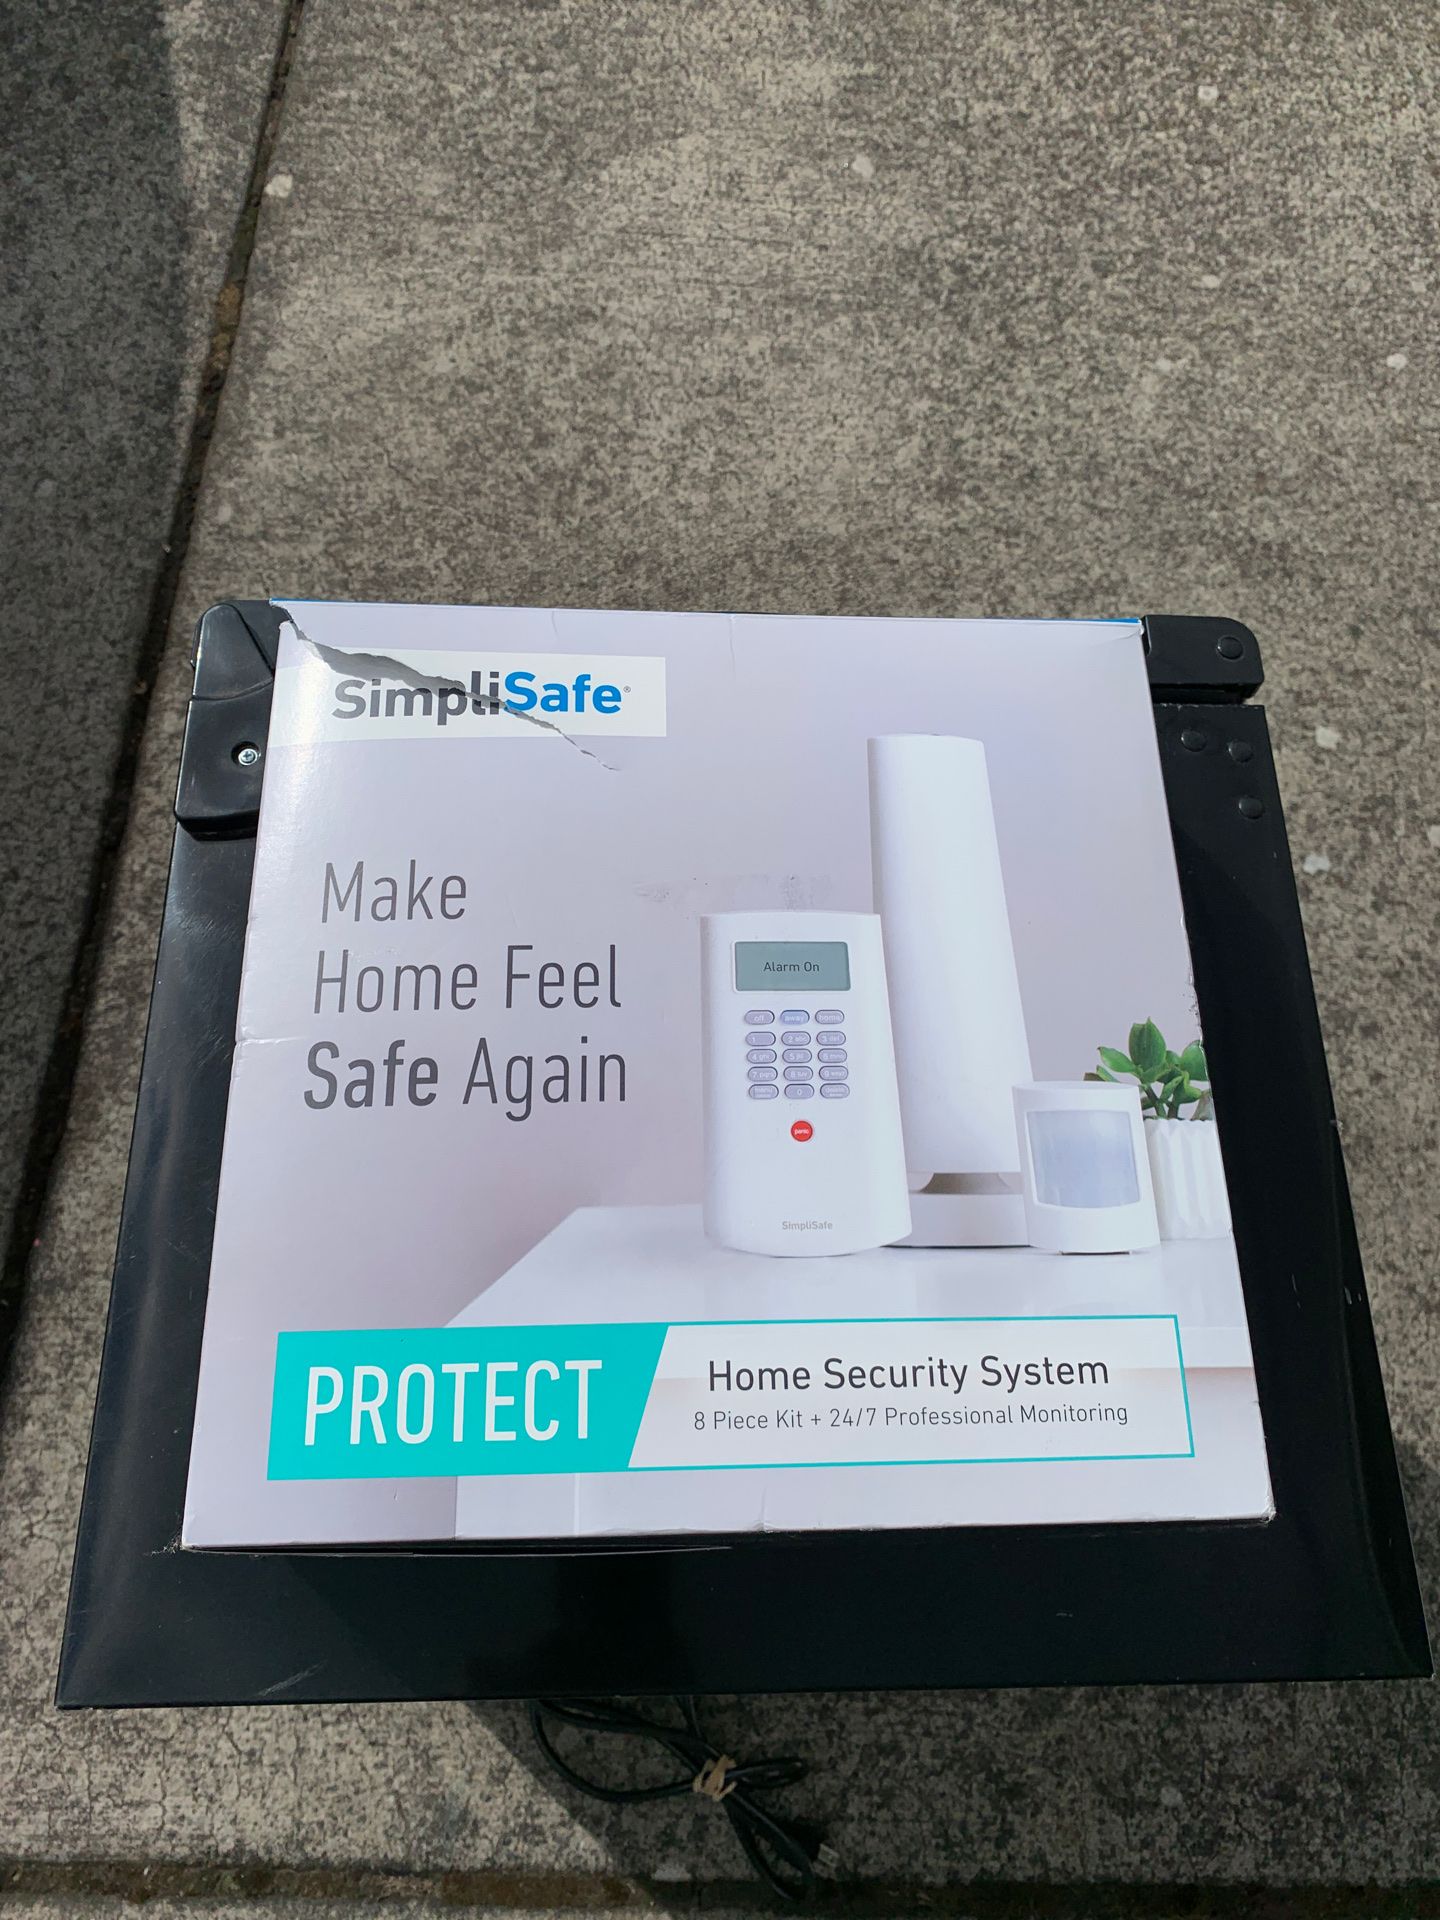 SimpliSafe Home security system. Never installed